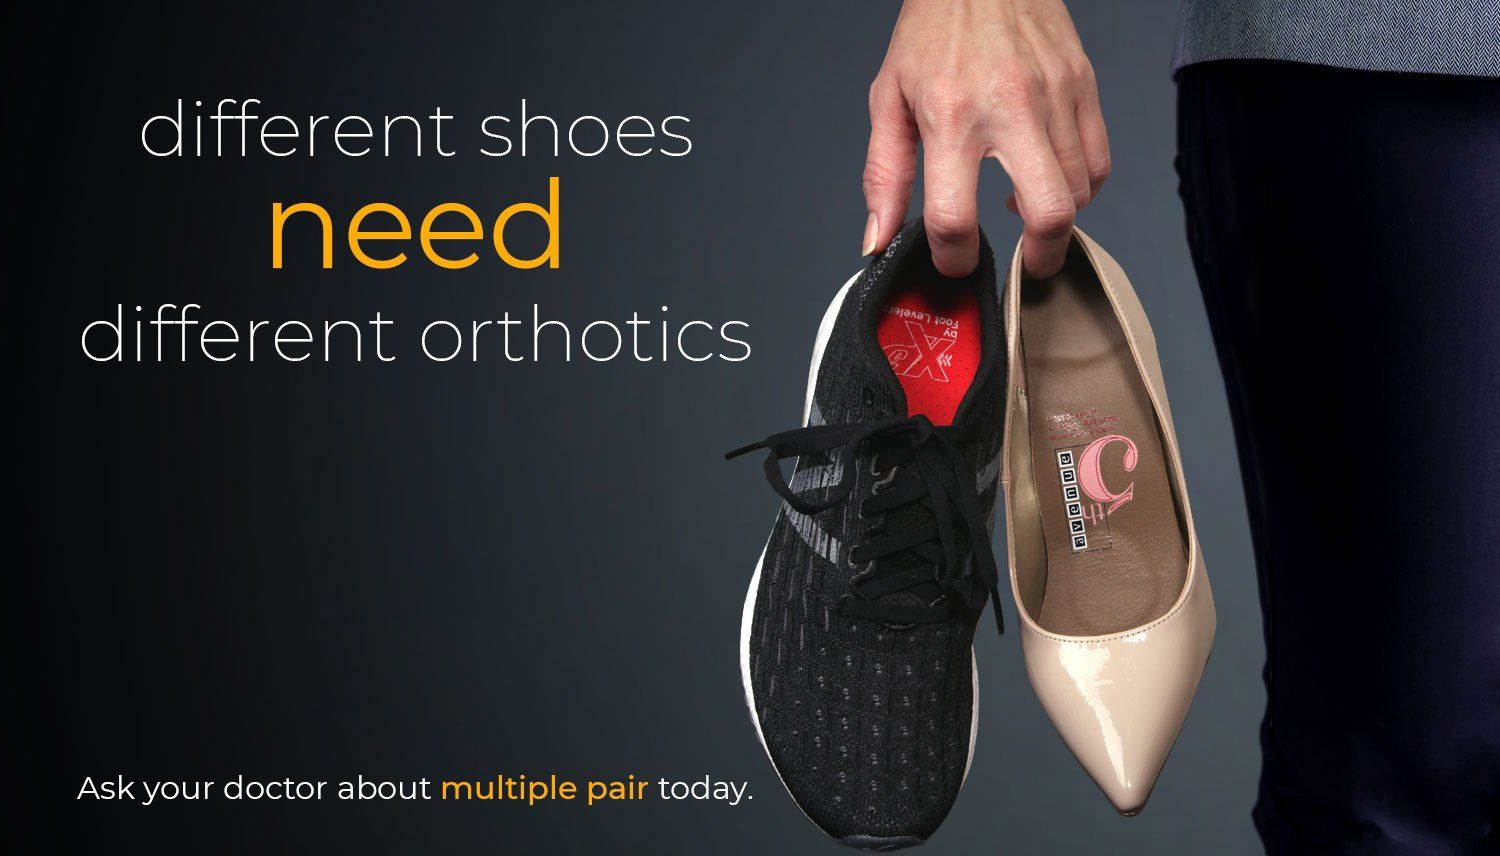 Orthotics shoes